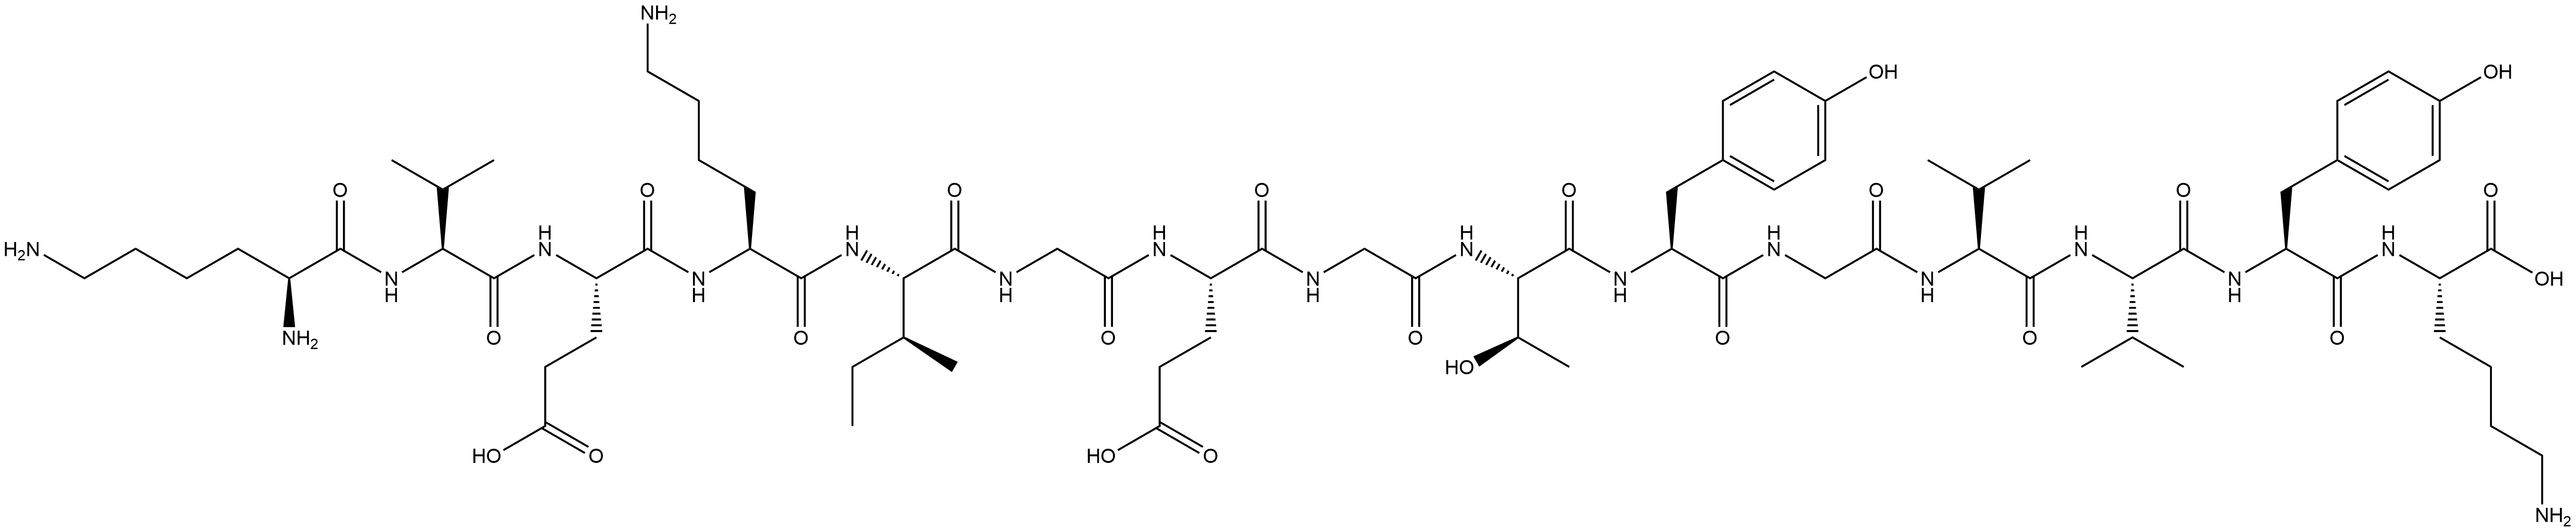 173691-86-6 L-Lysine, L-lysyl-L-valyl-L-α-glutamyl-L-lysyl-L-isoleucylglycyl-L-α-glutamylglycyl-L-threonyl-L-tyrosylglycyl-L-valyl-L-valyl-L-tyrosyl-